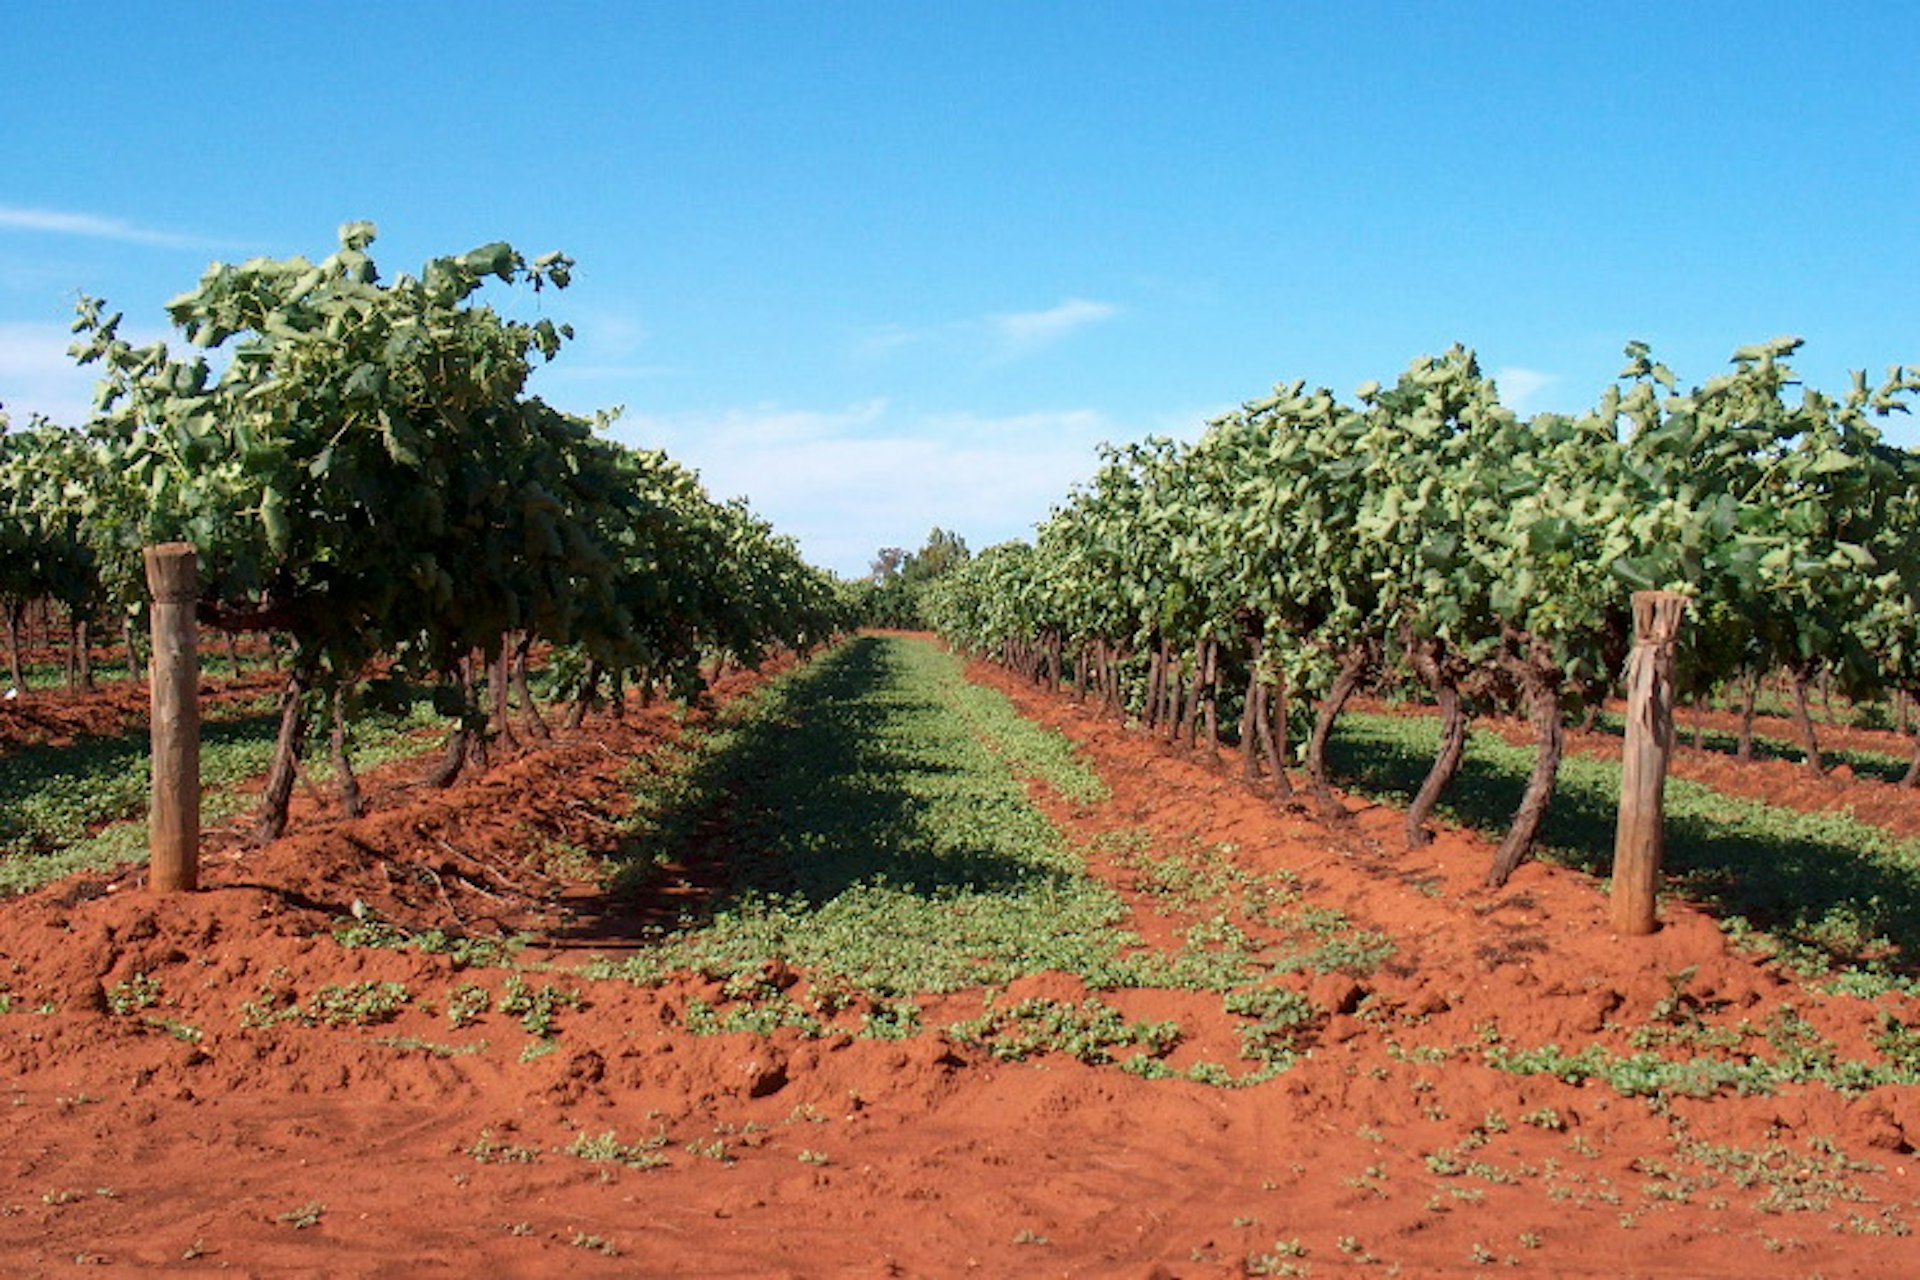 South Australian vineyard / Image by Sami Keinänen / CC BY-SA 2.0